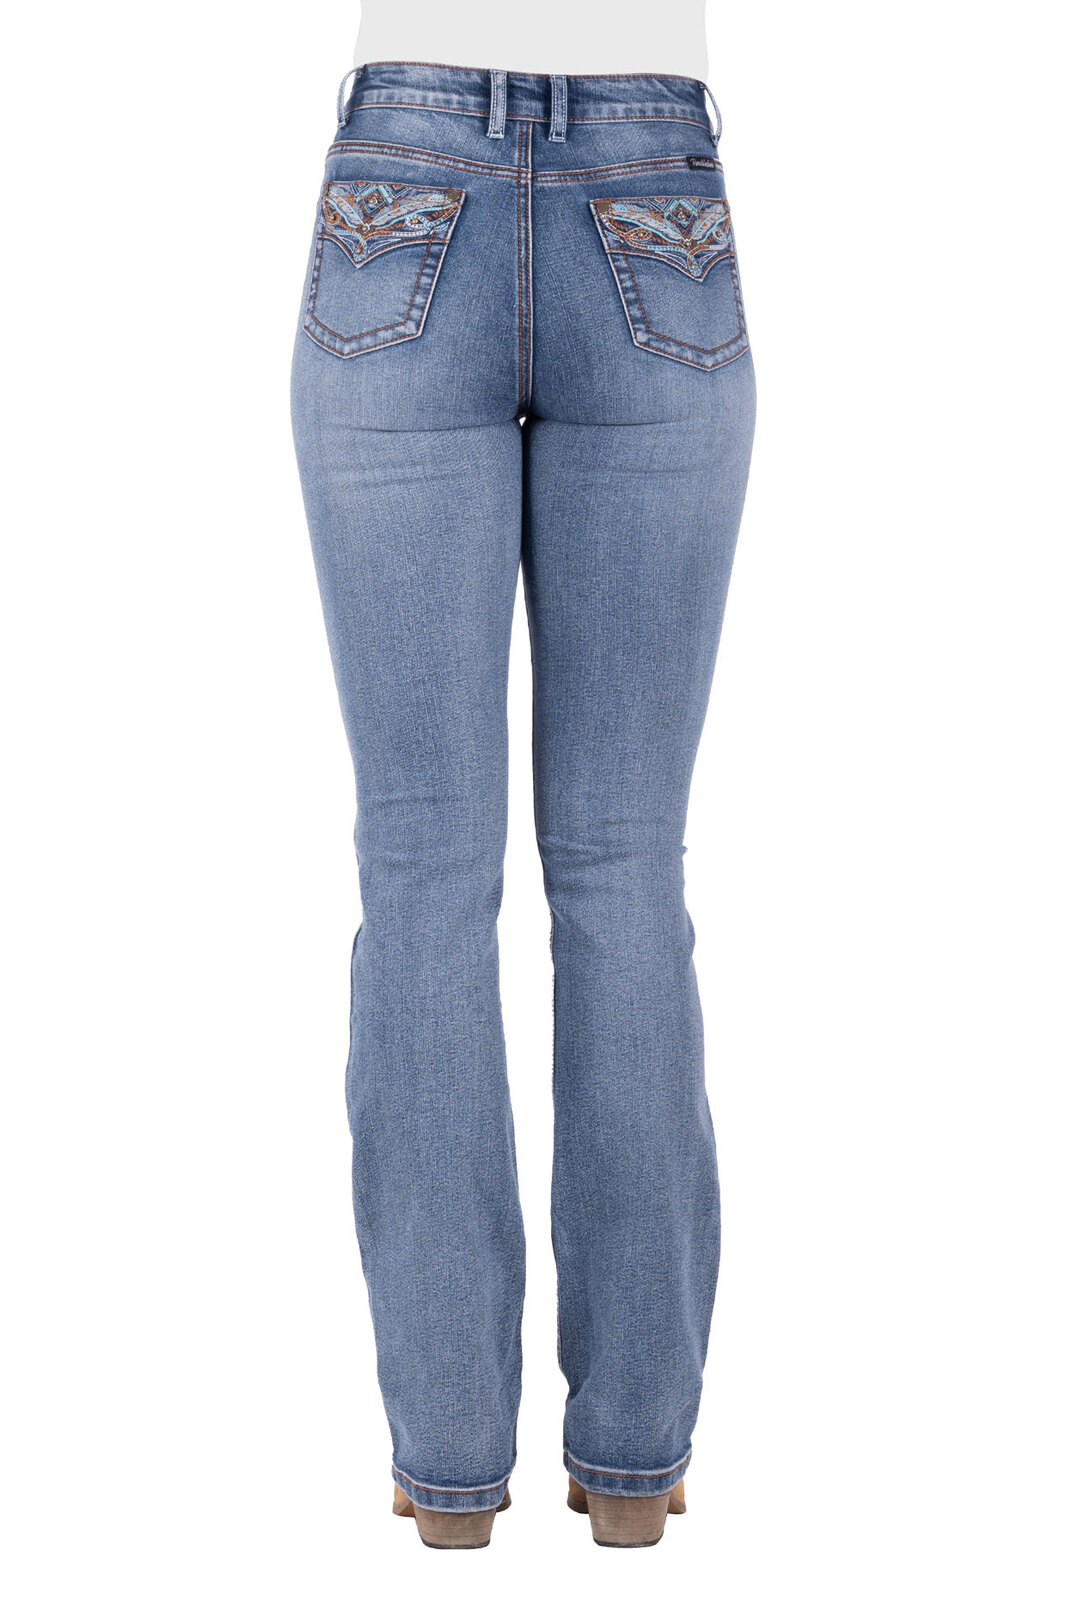 Buy Pure Western Womens Nina Hi Rise Bootcut Jeans - 34 Leg